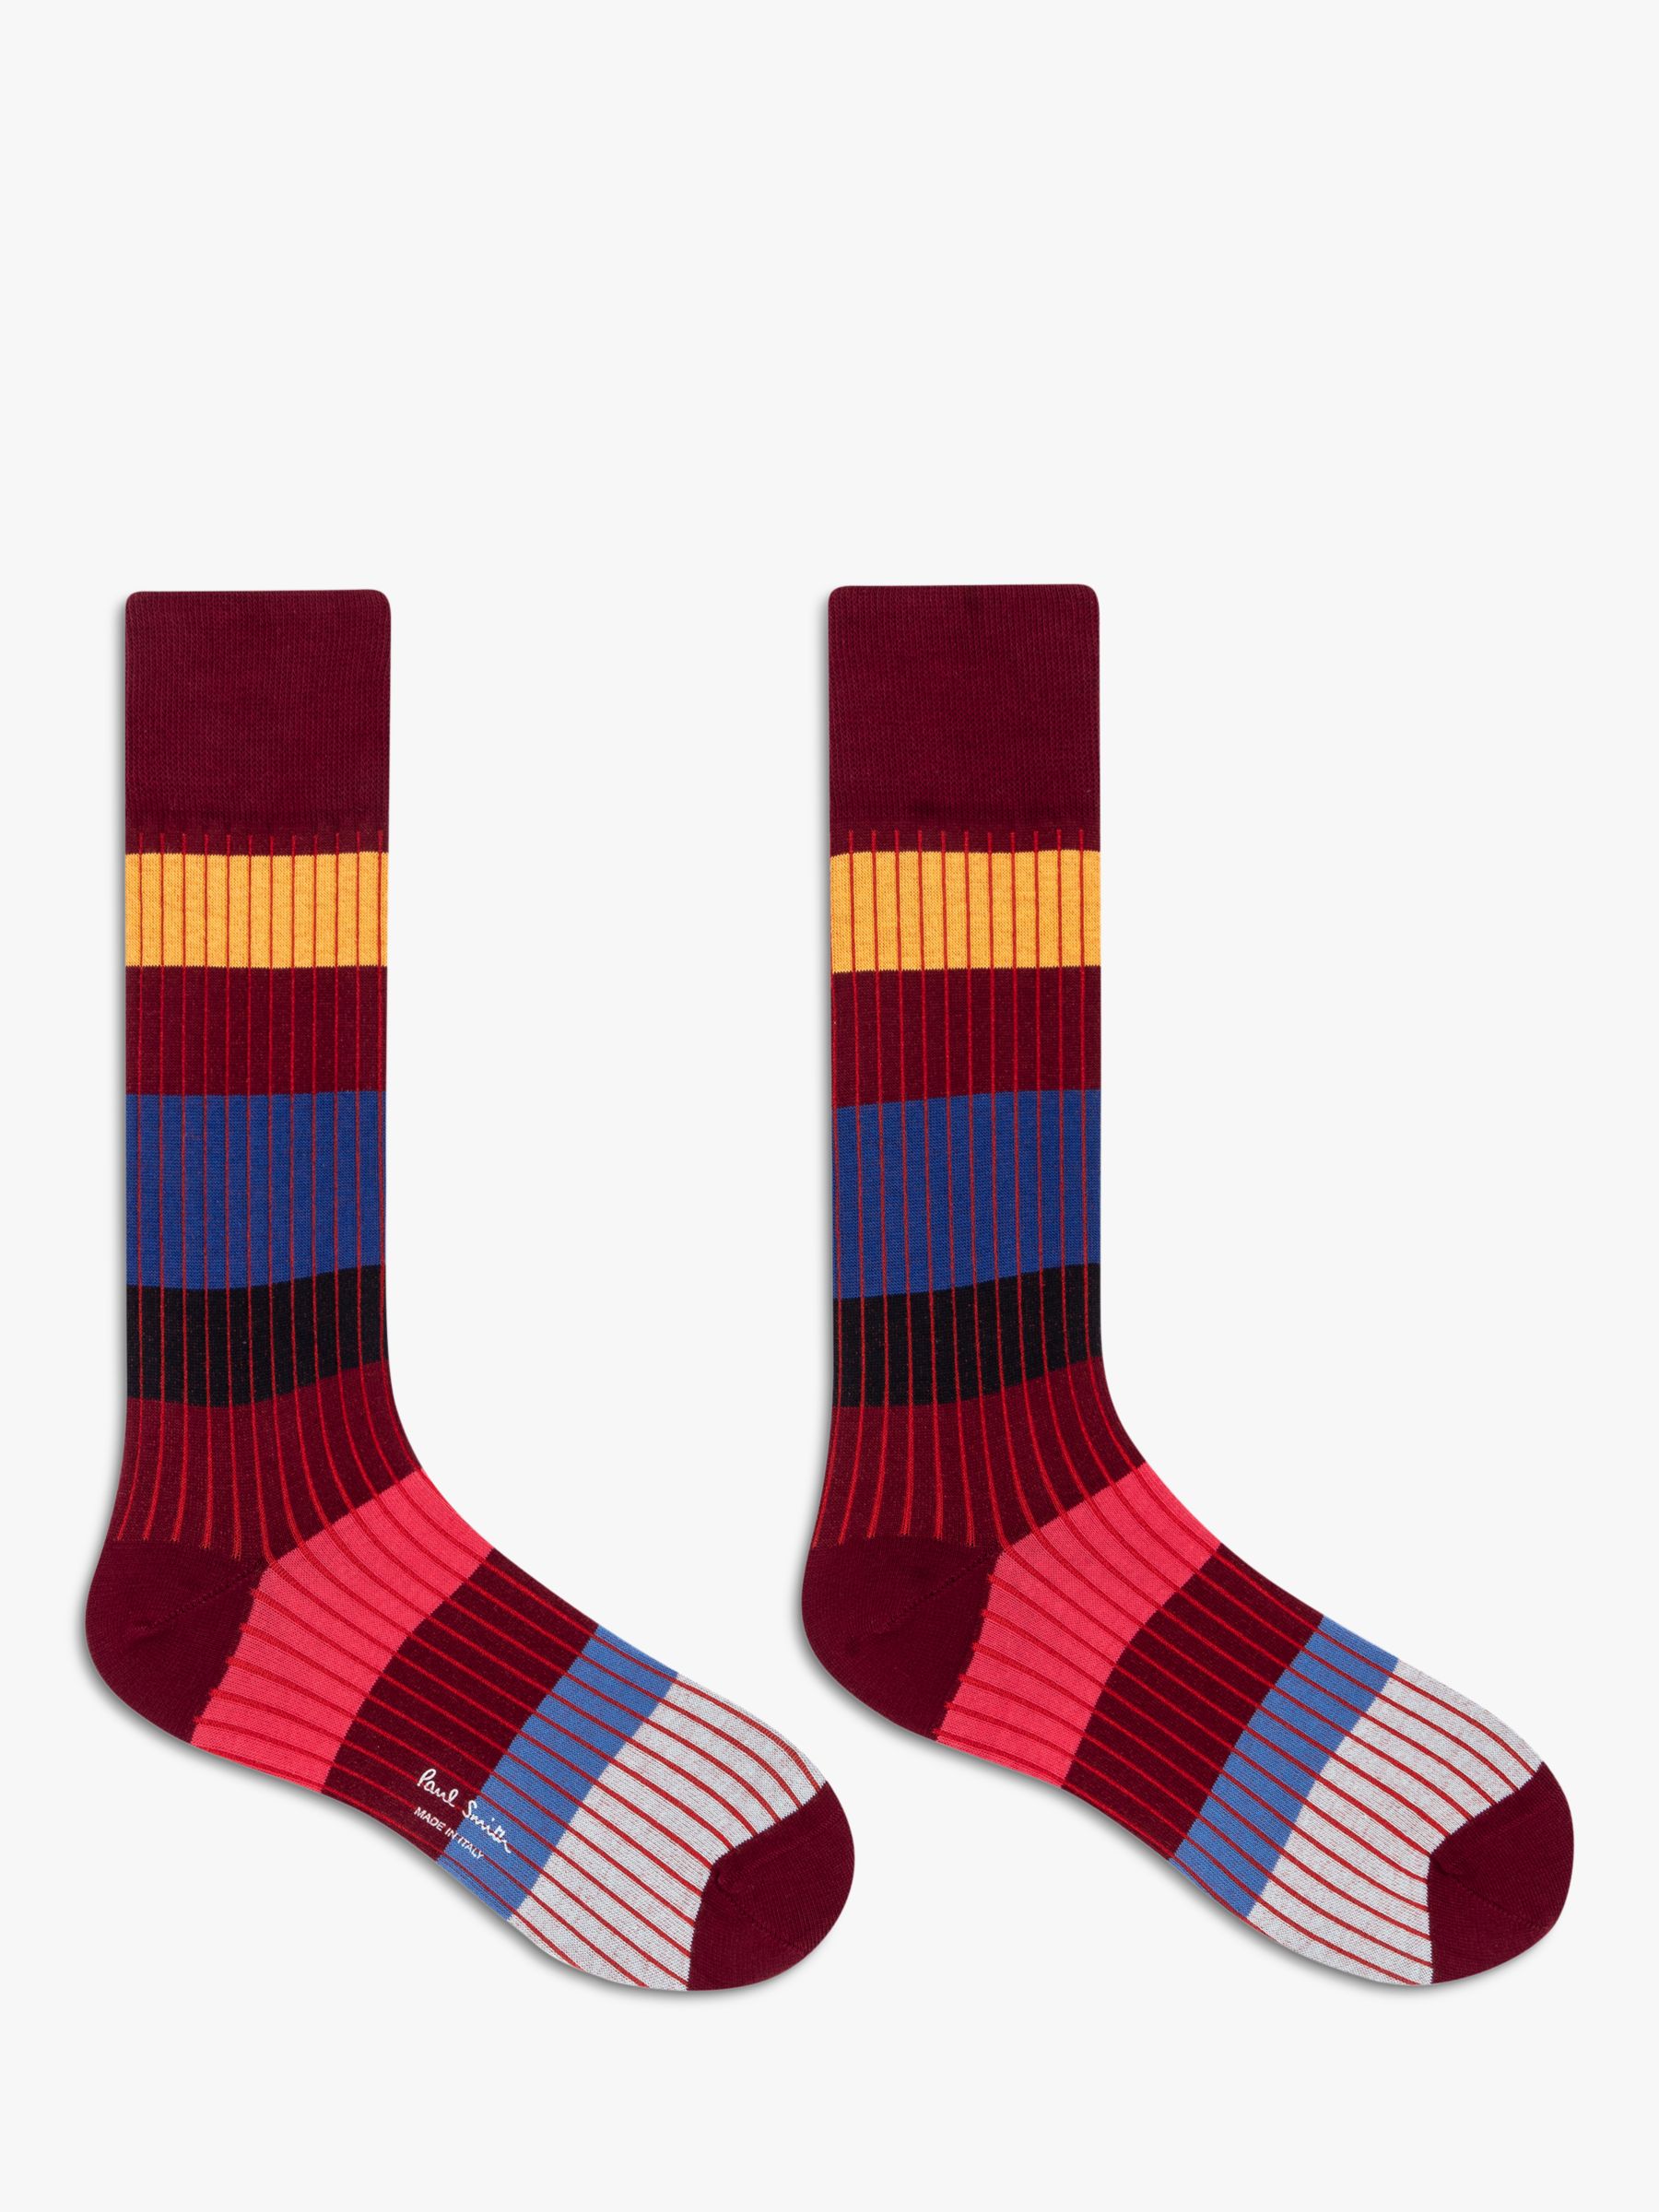 Paul Smith Errol Stripe Socks, Burgundy/Multi